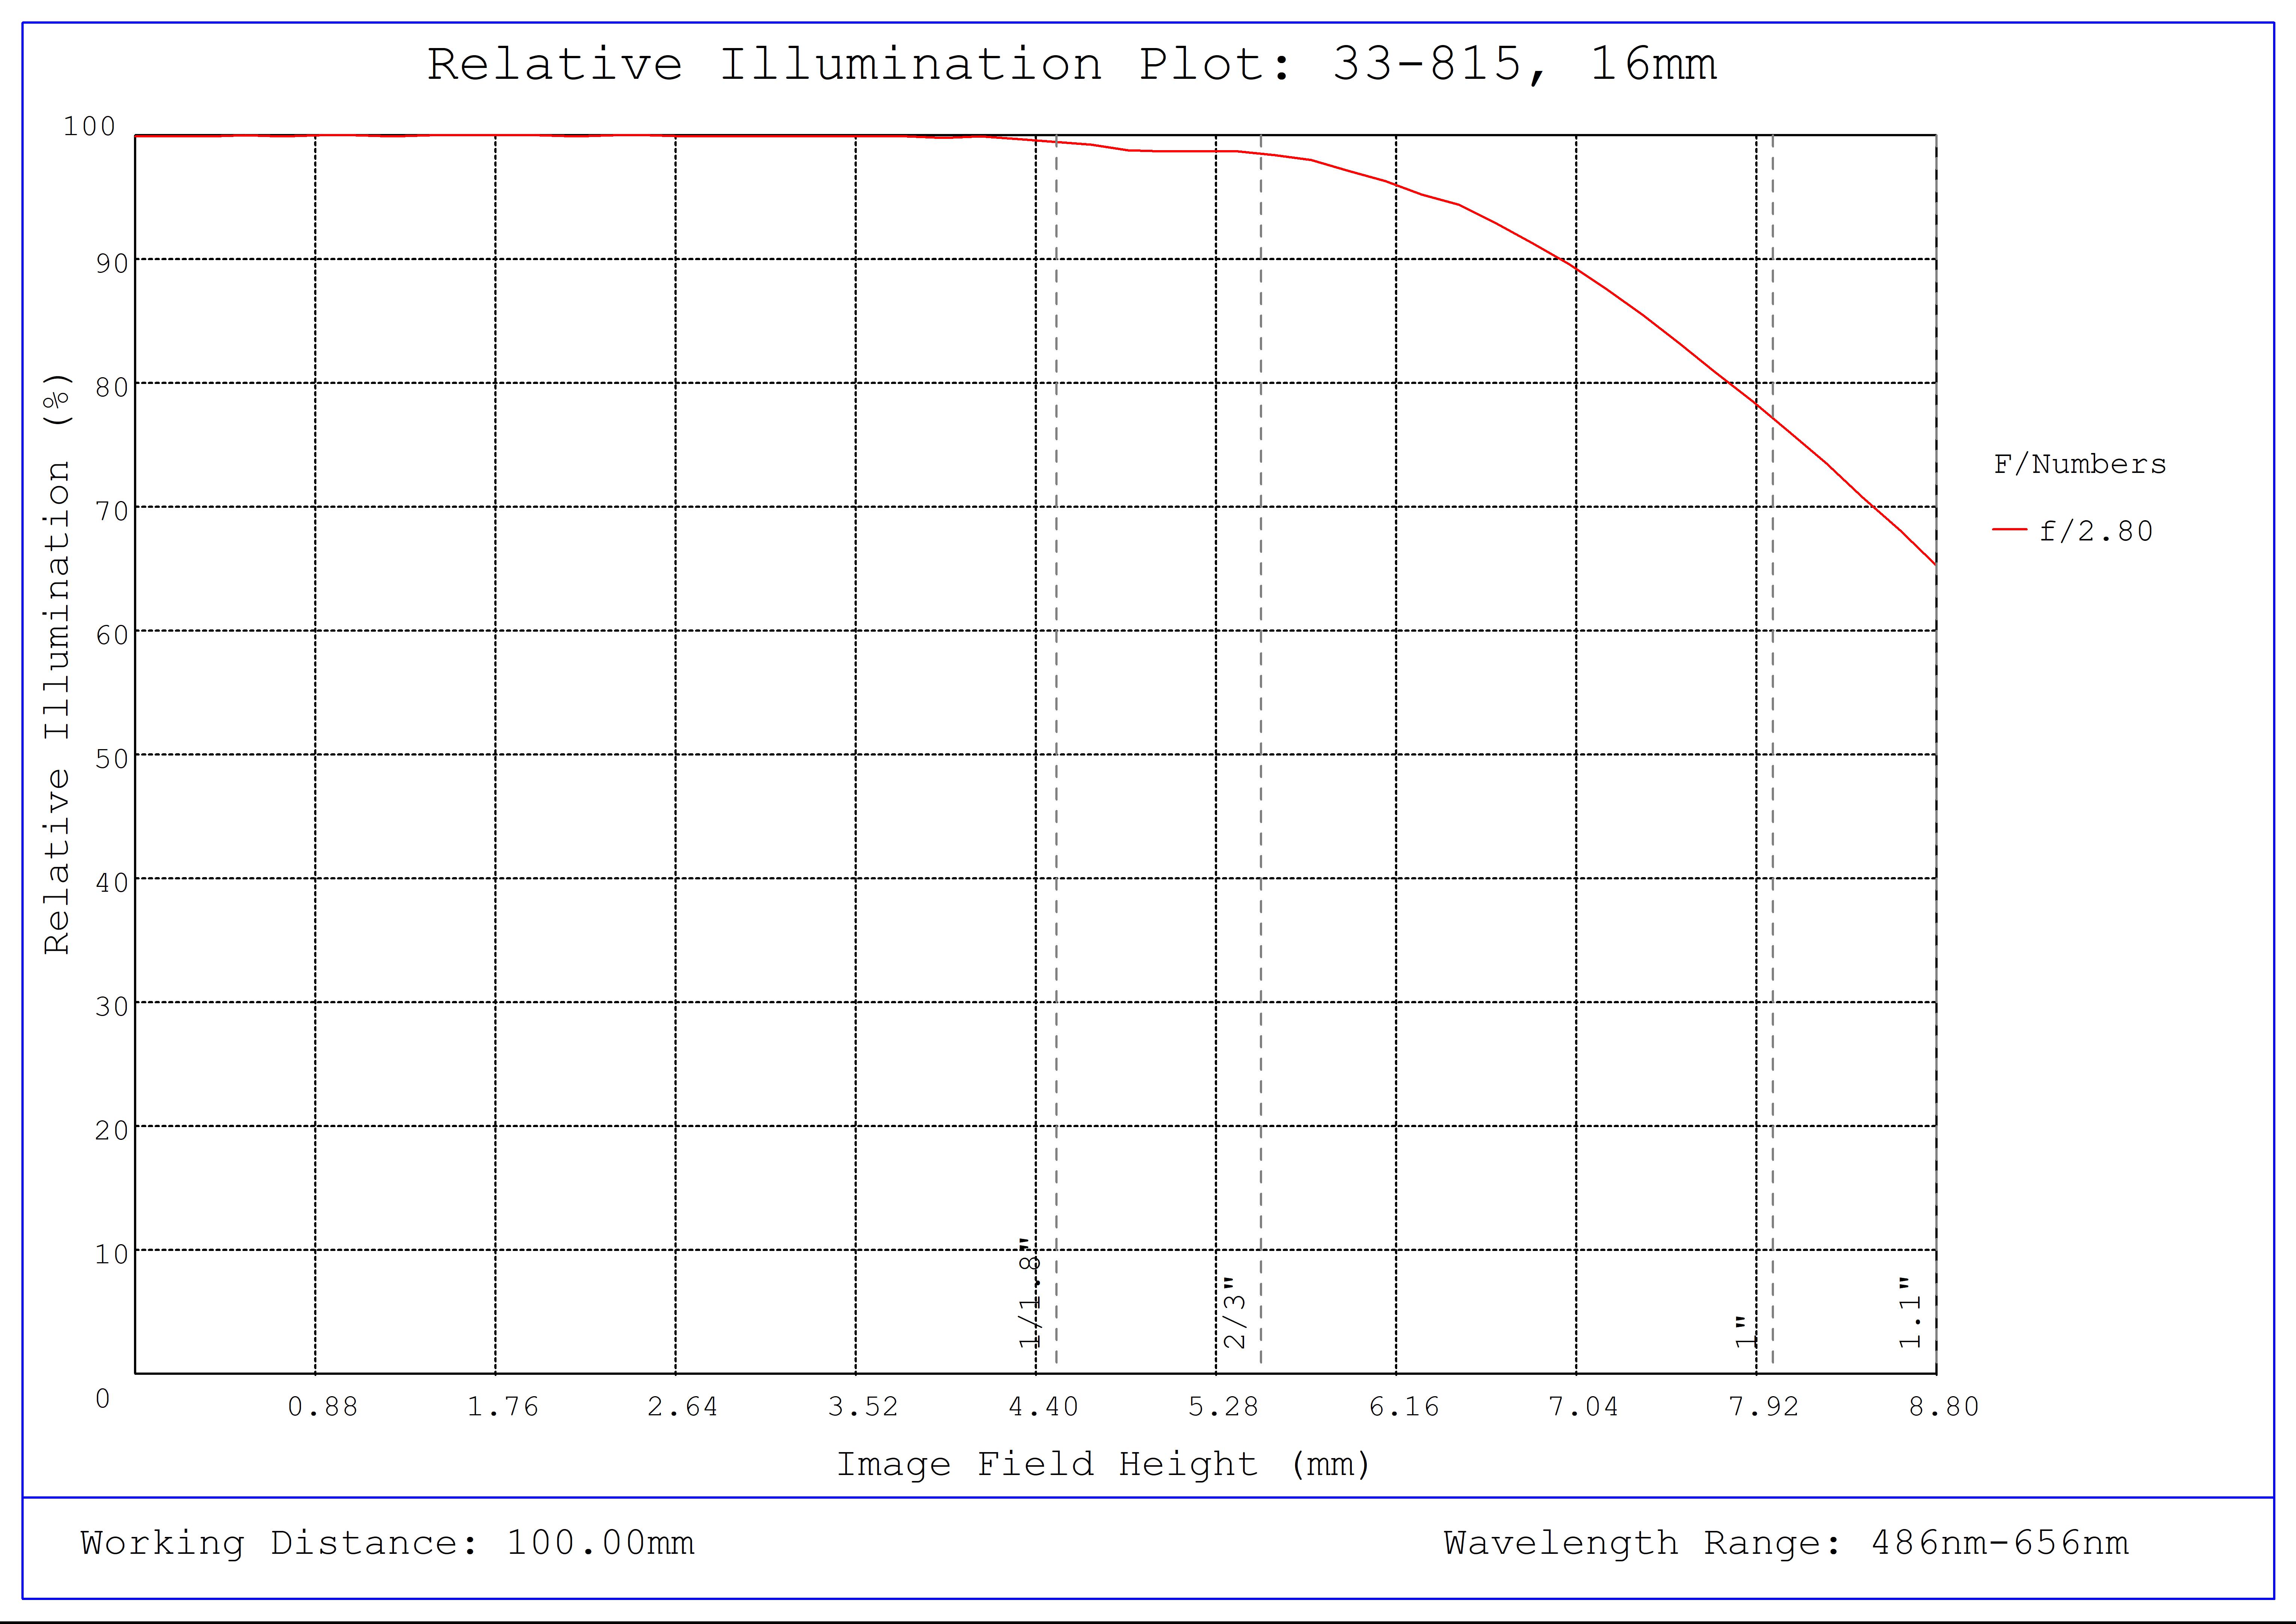 #33-815, 16mm f/2.8, HPi Series Fixed Focal Length Lens, Relative Illumination Plot